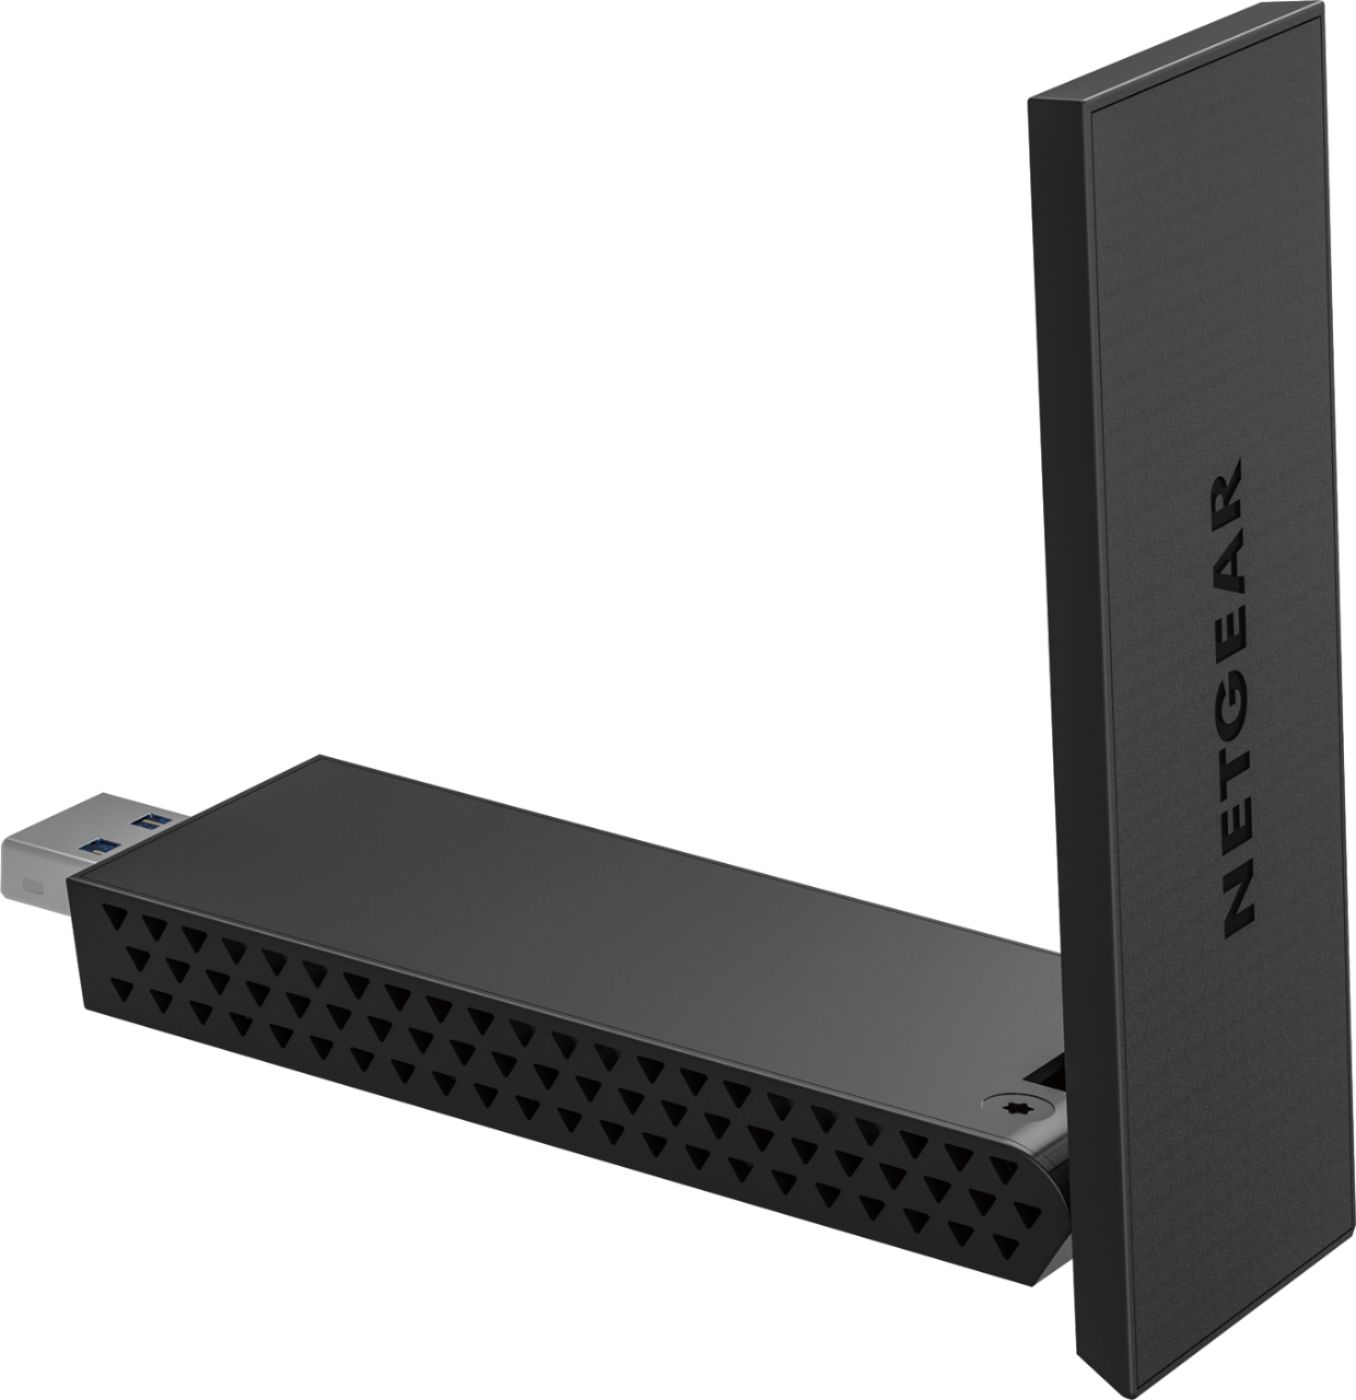 Angle View: NETGEAR - AC1200 Dual-Band WiFi USB 3.0 Adapter - Black